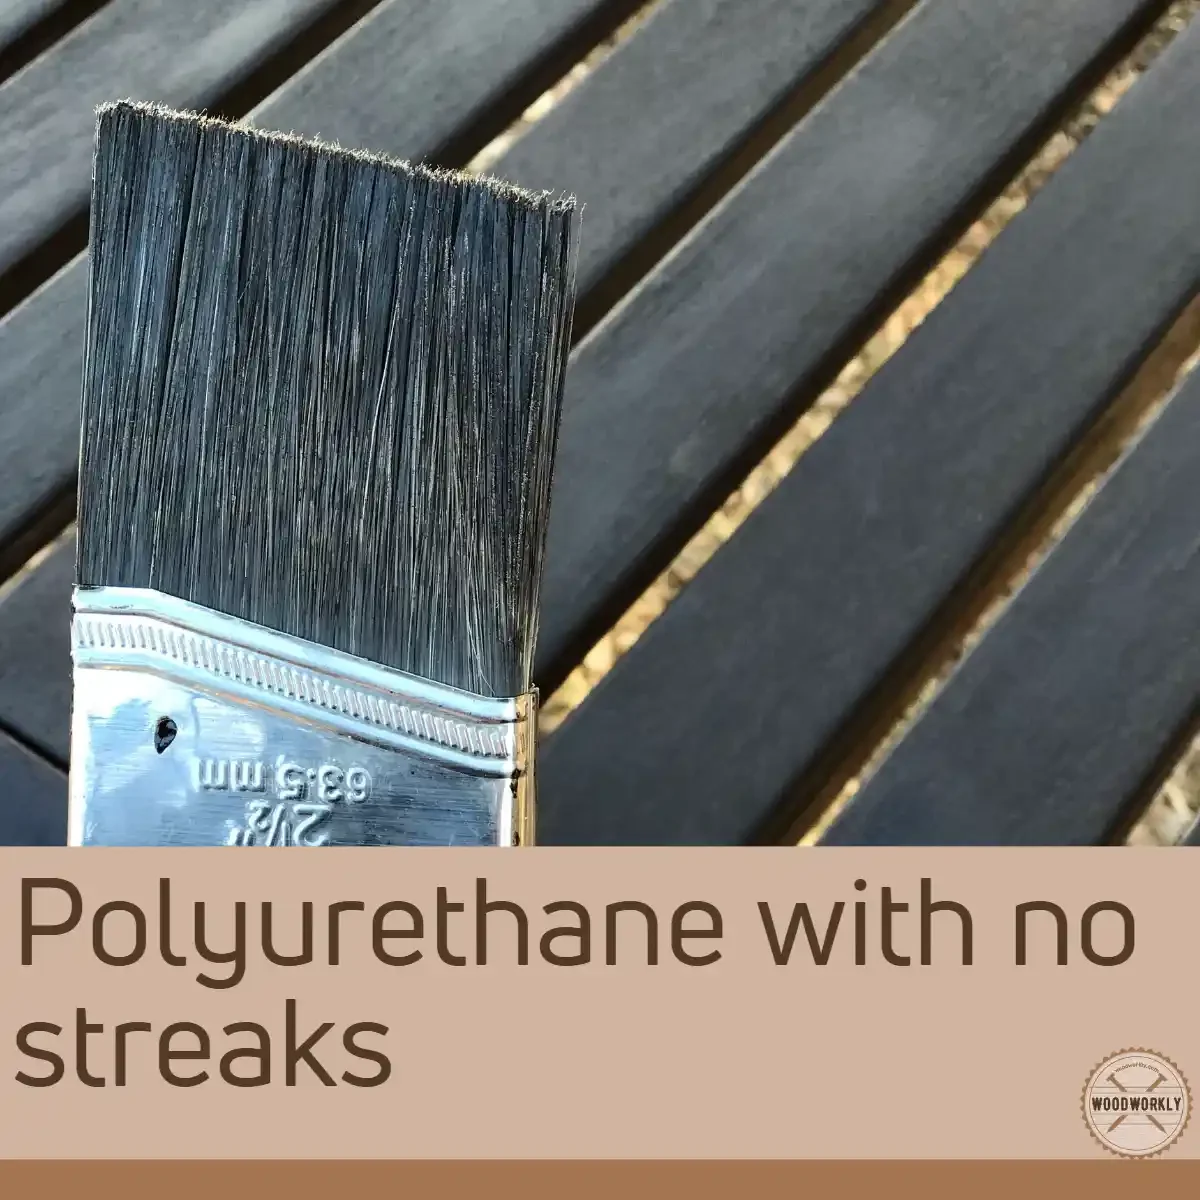 Polyurethane with no streaks